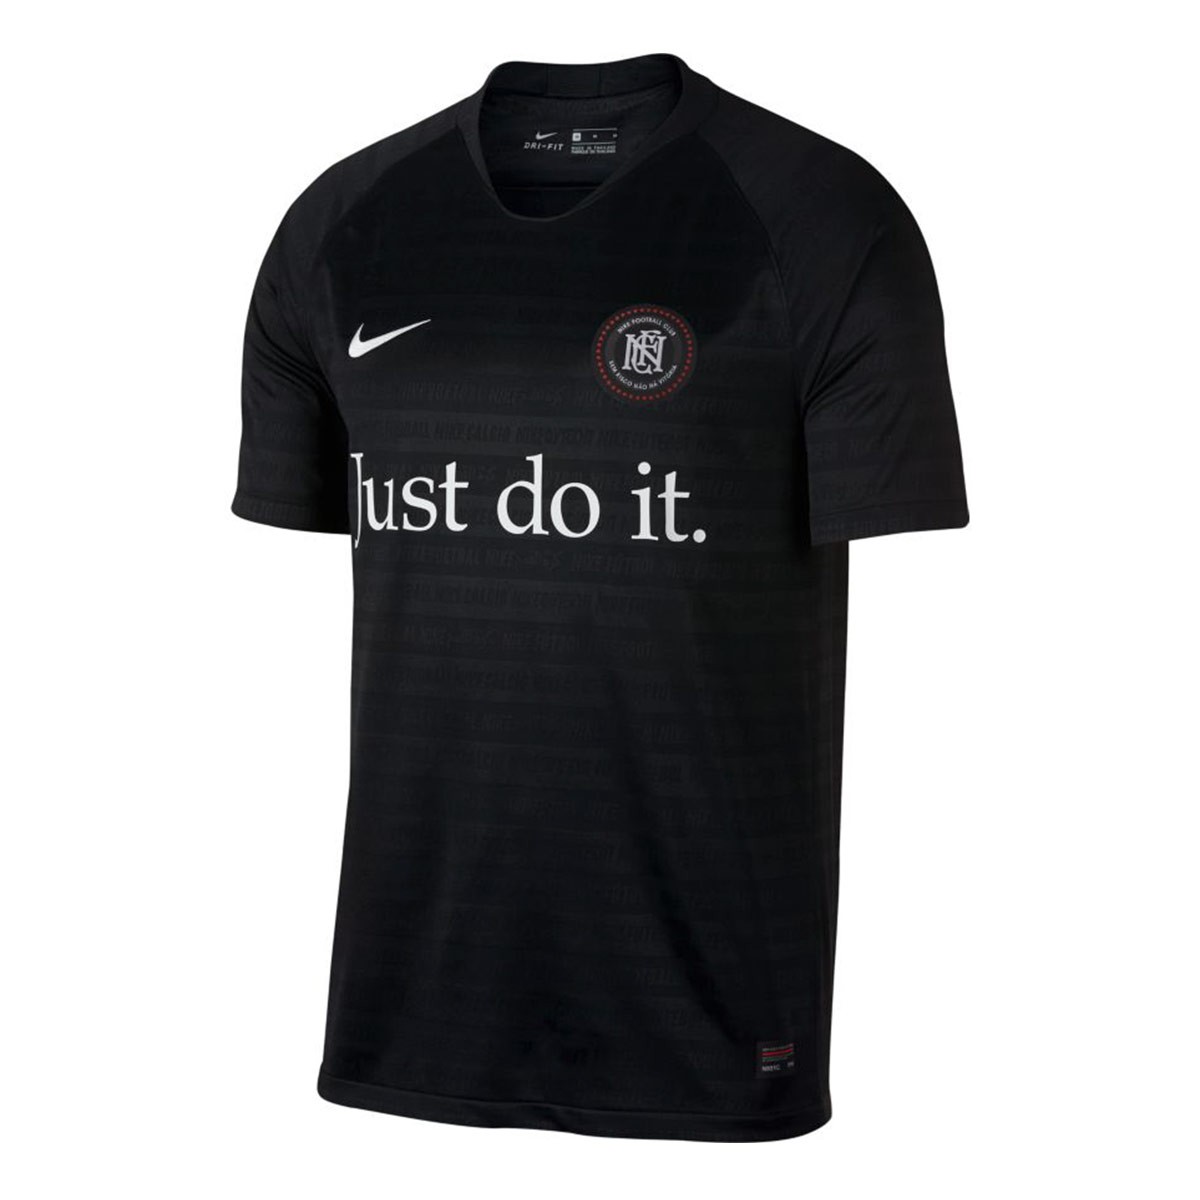 Jersey Nike NIKE F.C. Away Black-White - Football store Fútbol Emotion